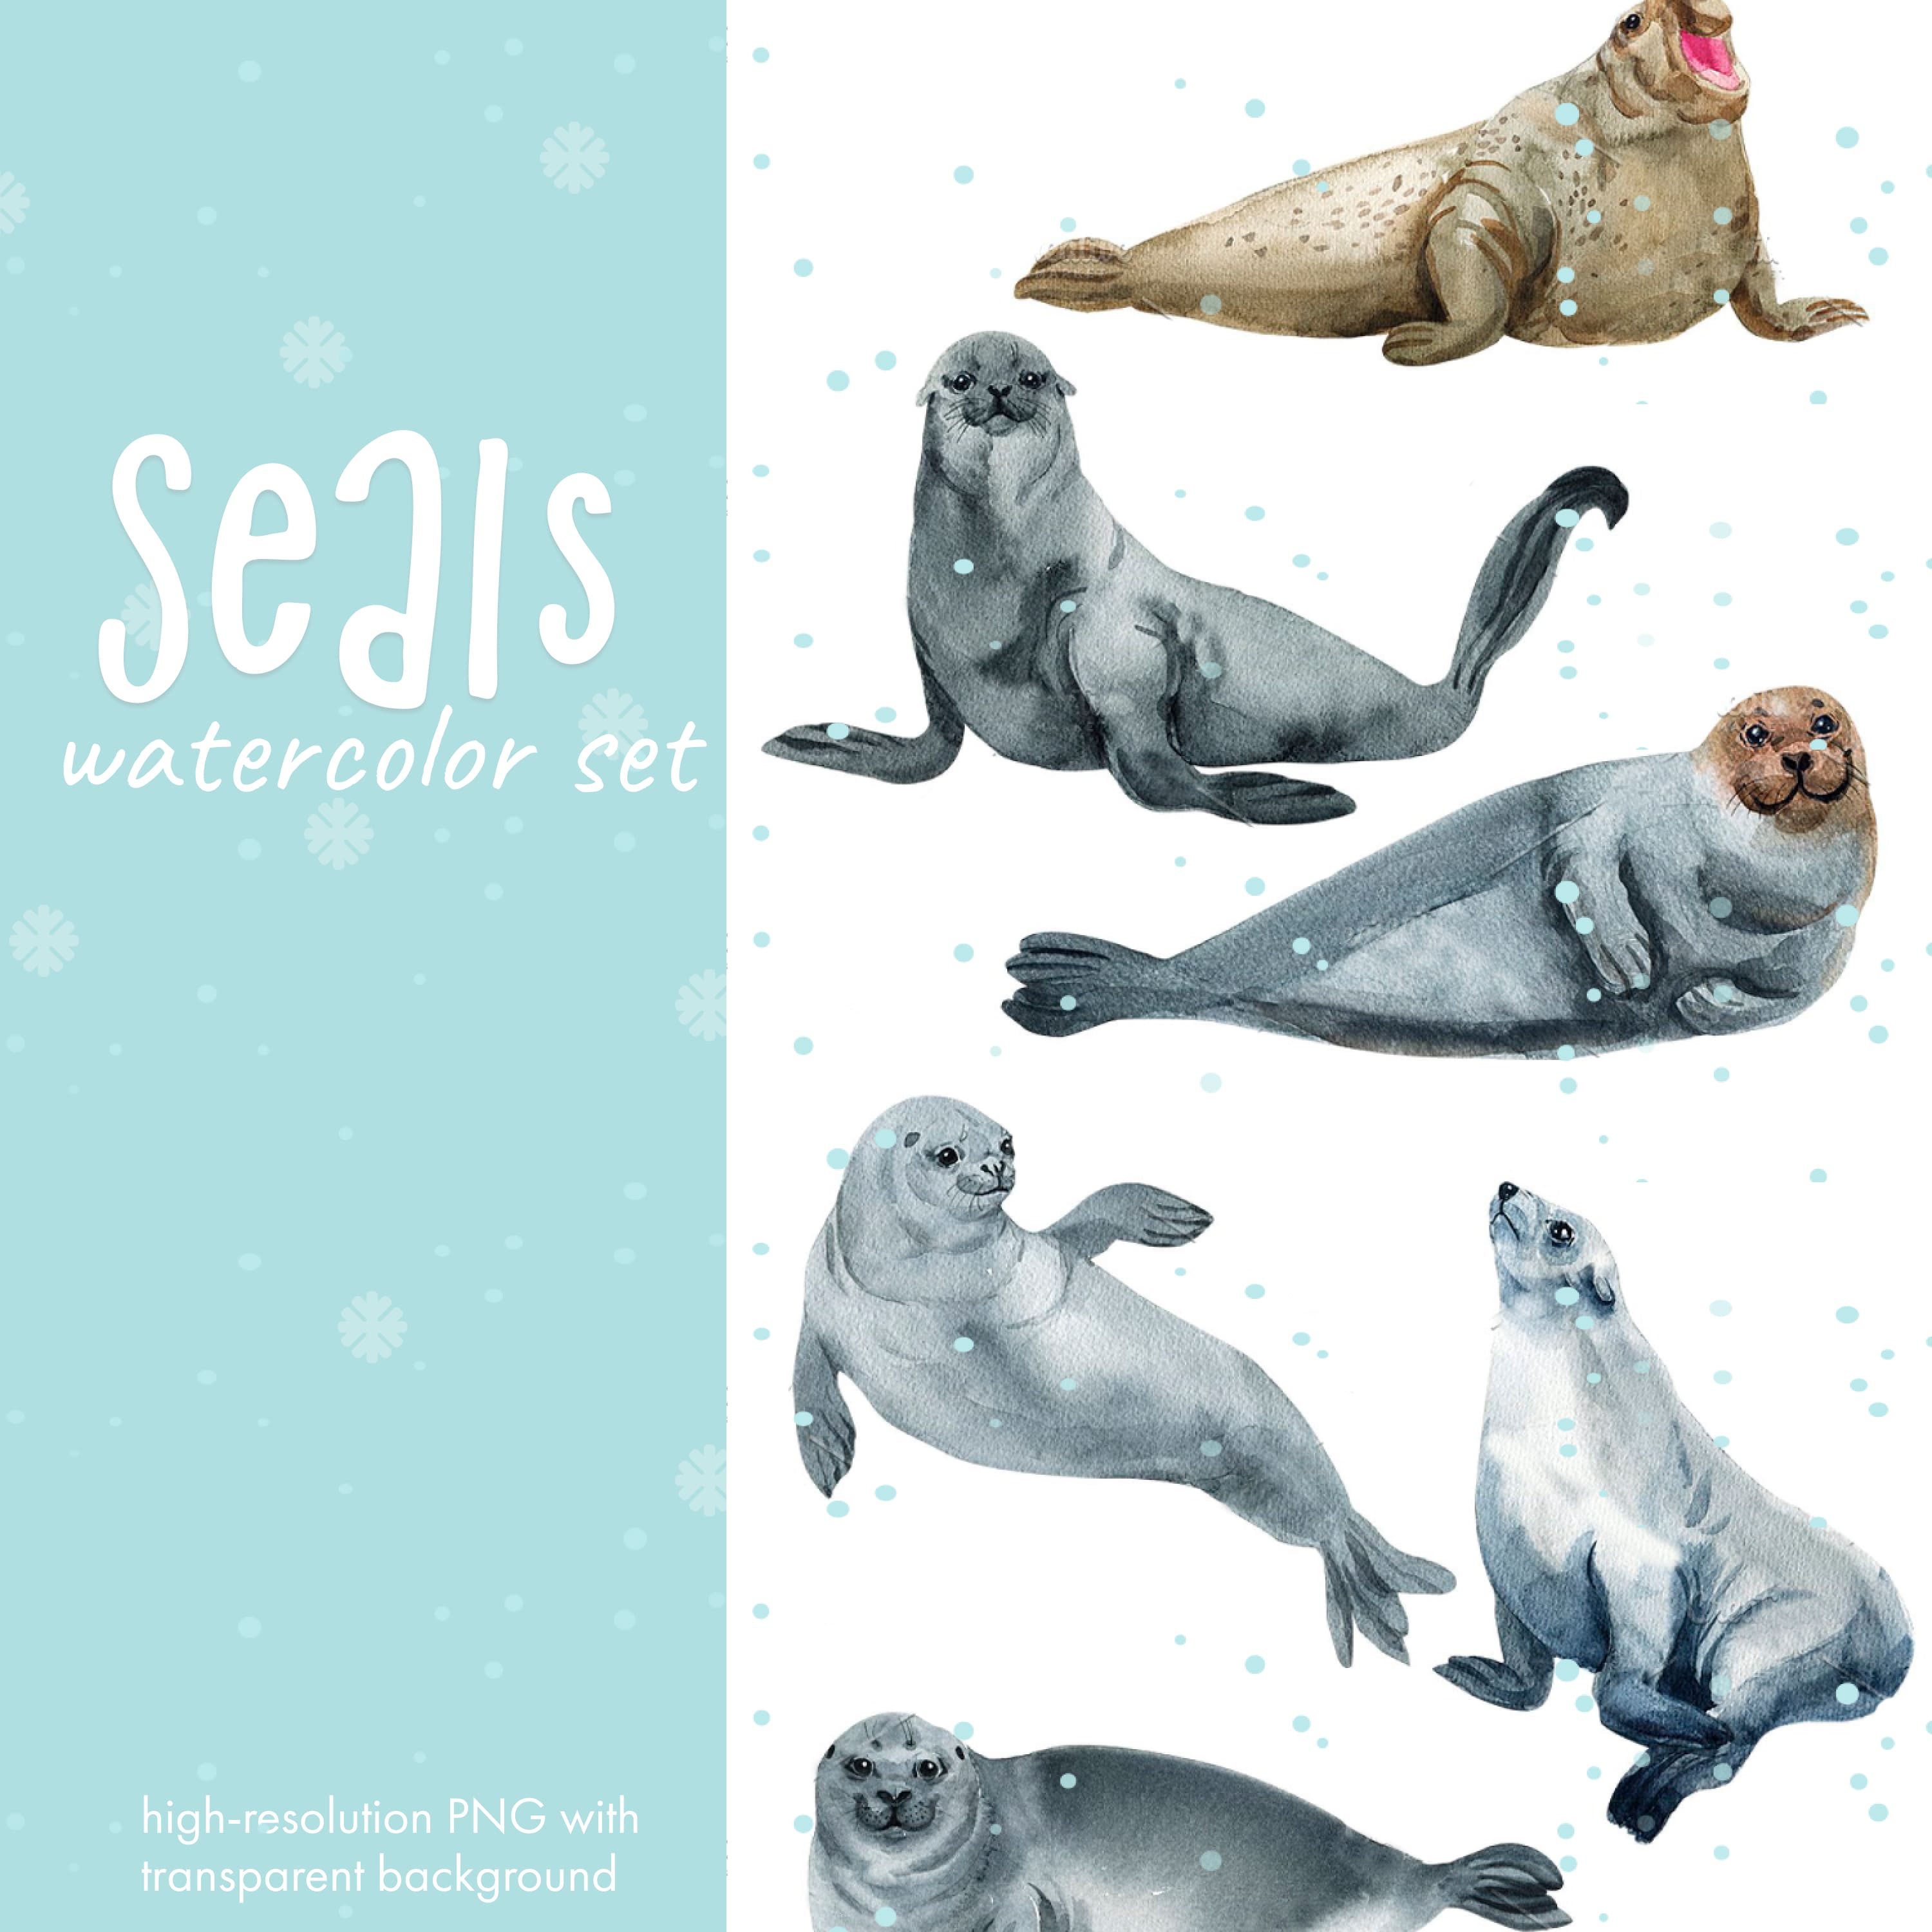 Seals - watercolor set.